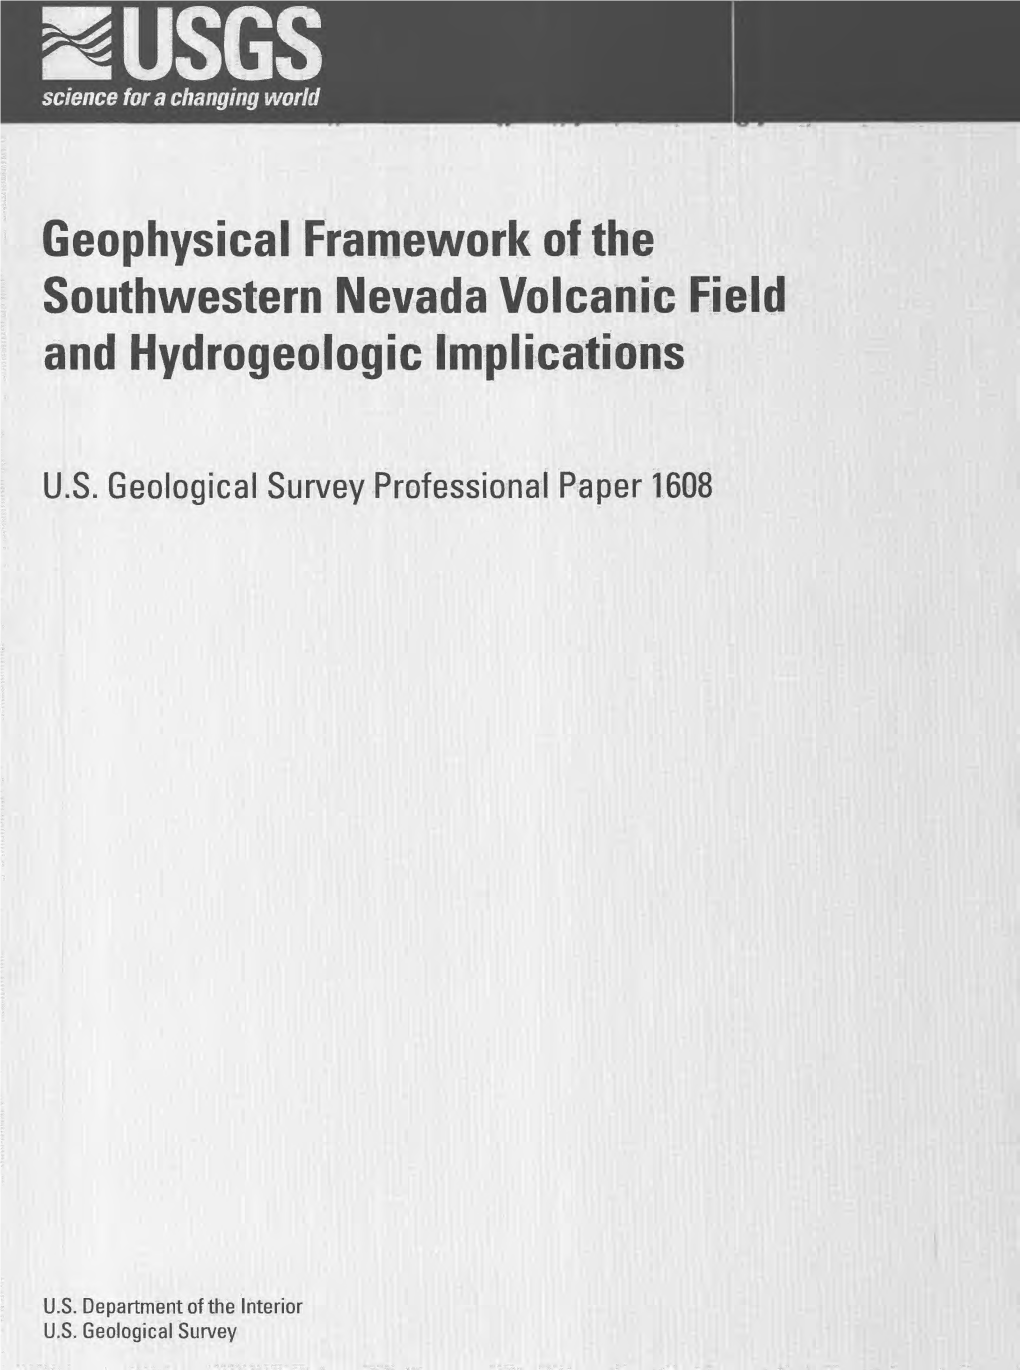 Geophysical Framework of the Southwestern Nevada Volcanic Field and Hydrogeologic Implications